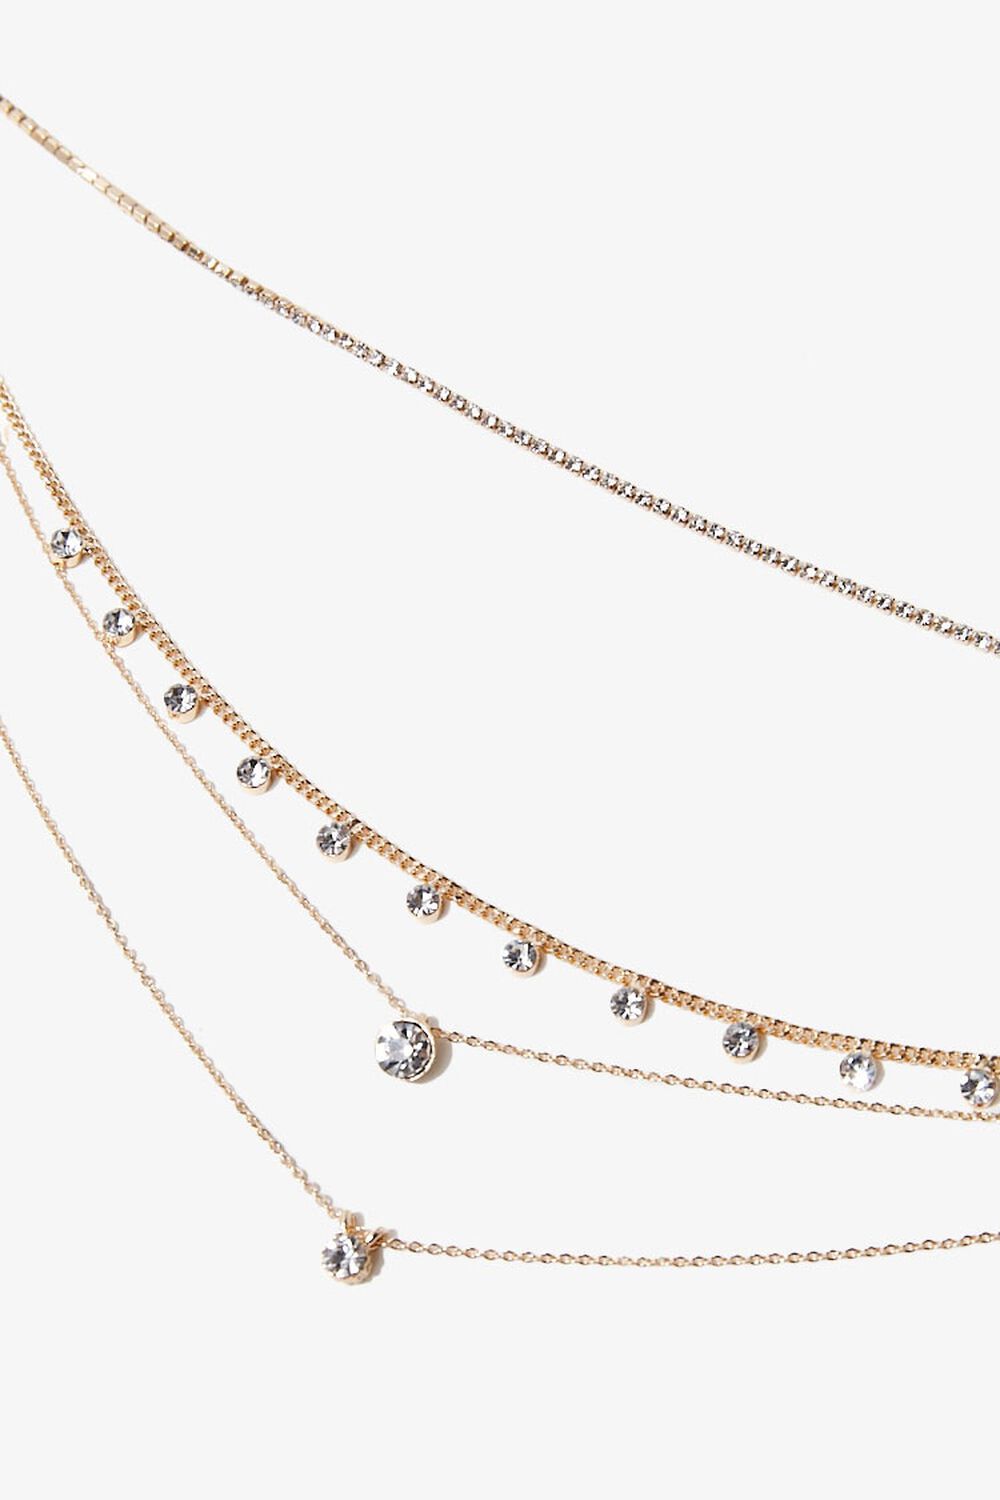 GOLD/CLEAR Rhinestone Pendant Layered Necklace, image 2